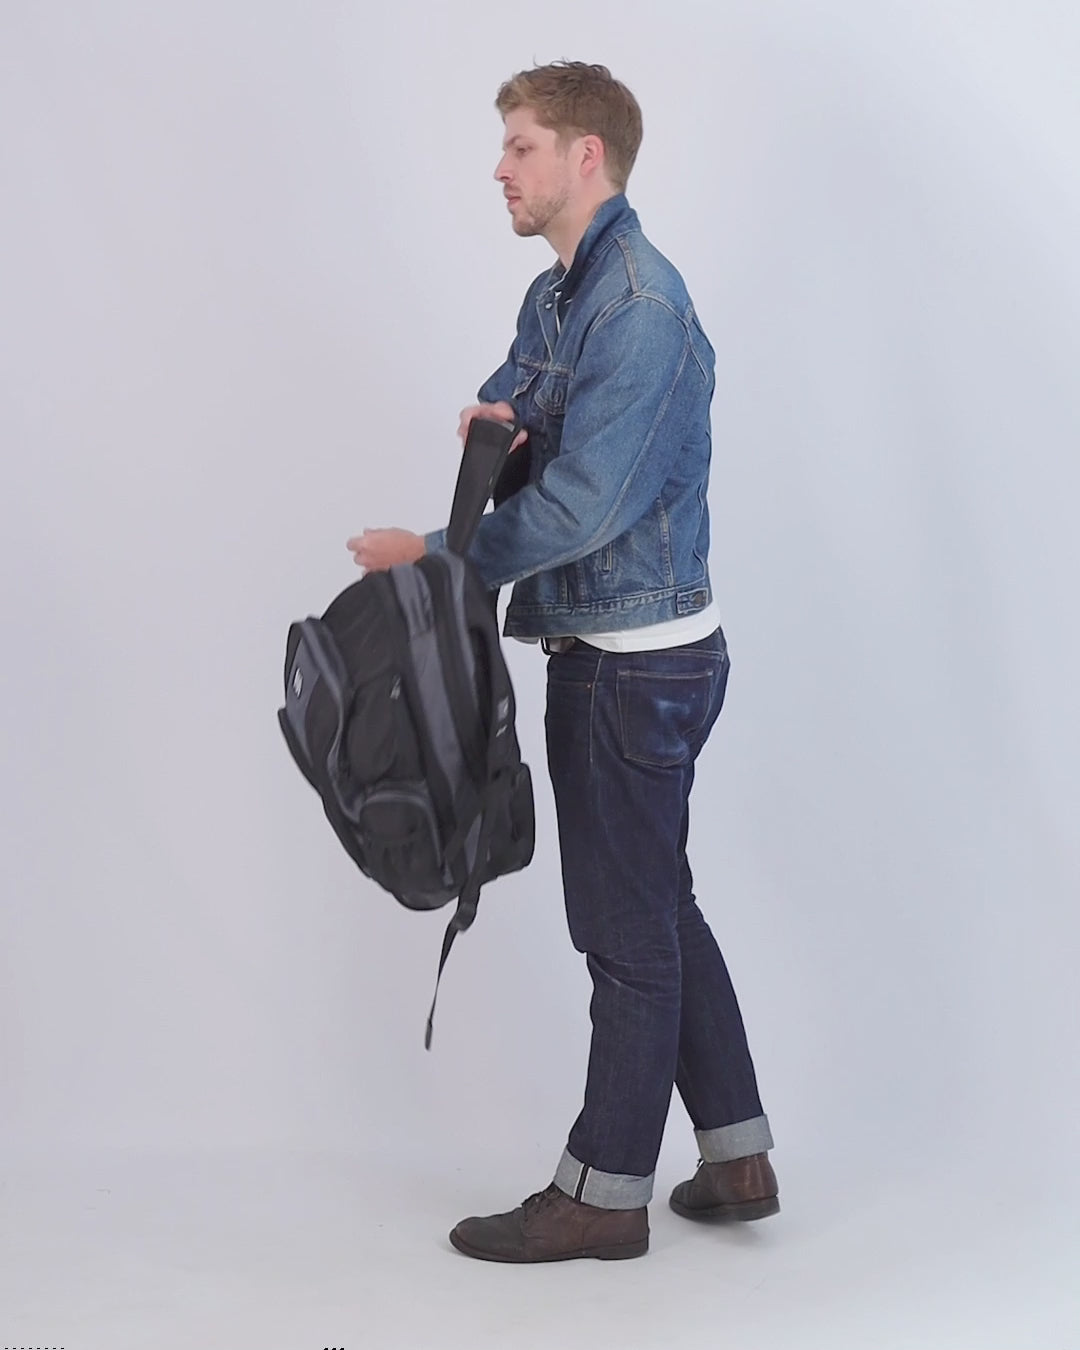 UBF Backpack Extra-Large in BLACK